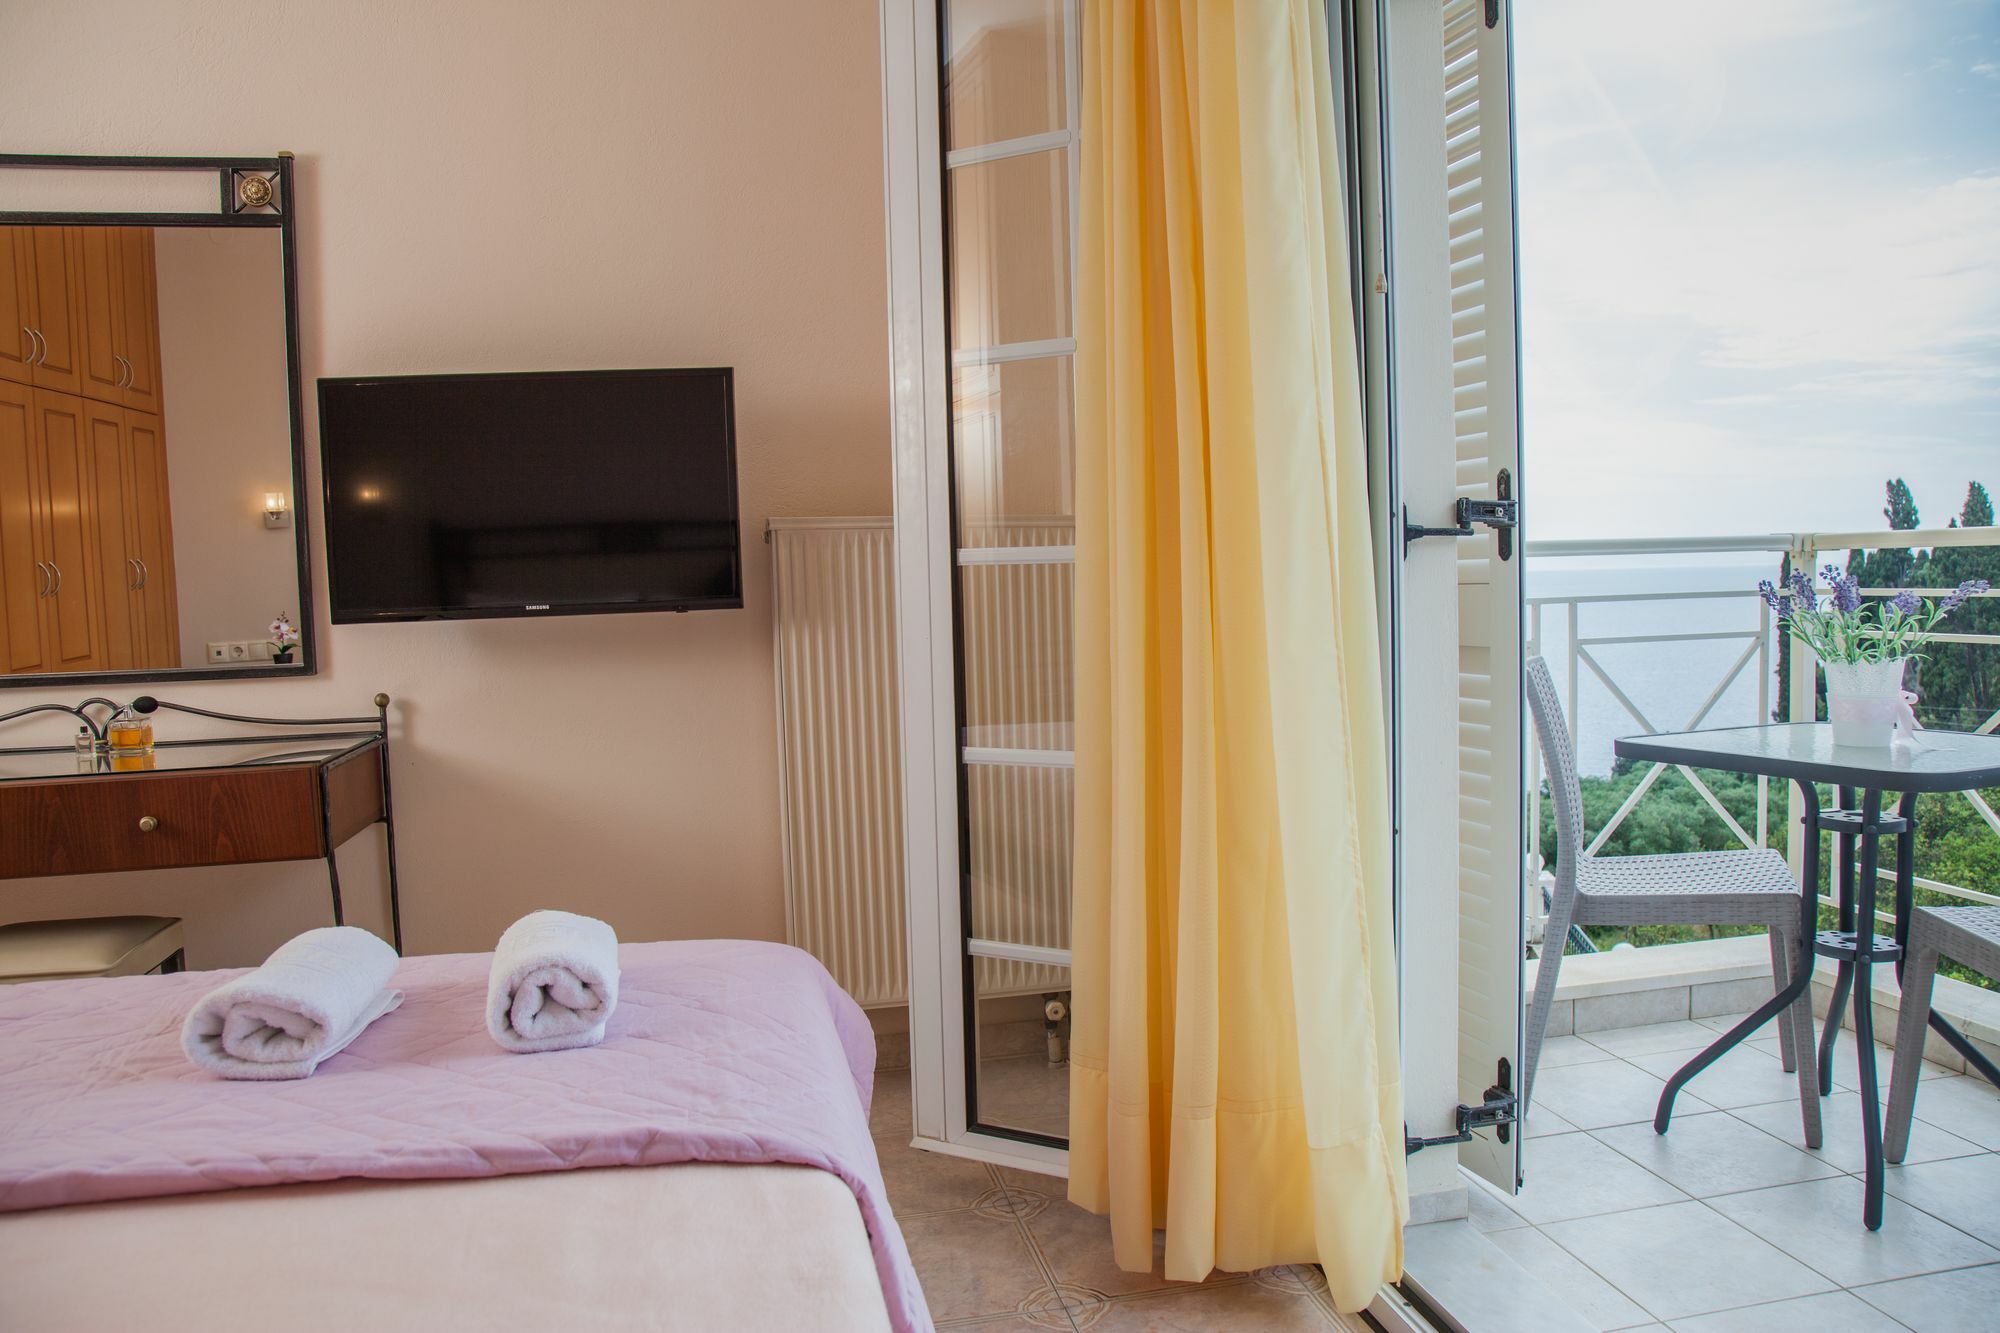 Brentanos Apartments - A - View Of Paradise Gastouri  Dış mekan fotoğraf